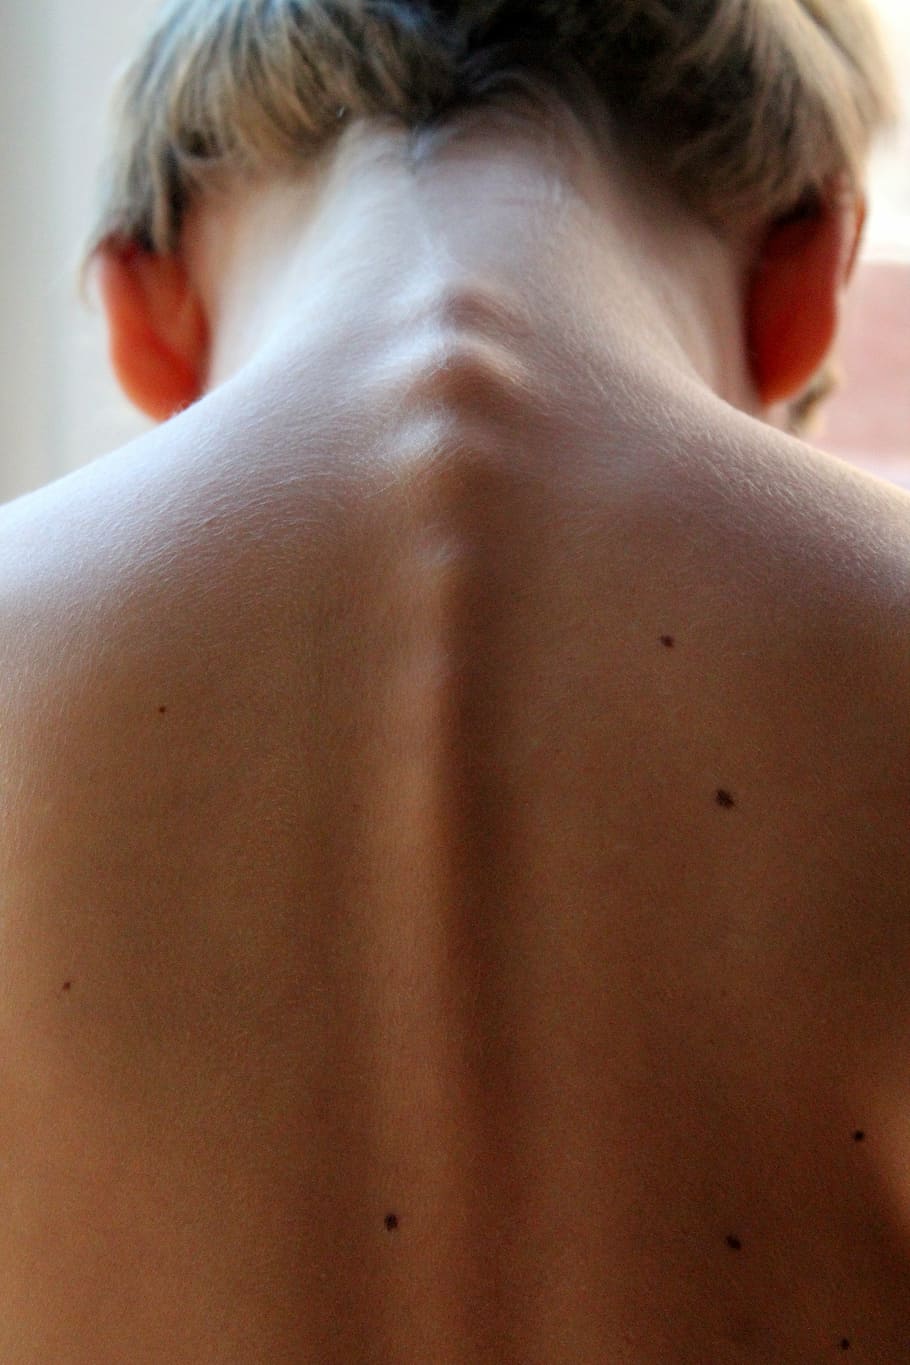 woman's backbone, spinal column, hair, back, neo, child, rear view, human body part, human skin, skin